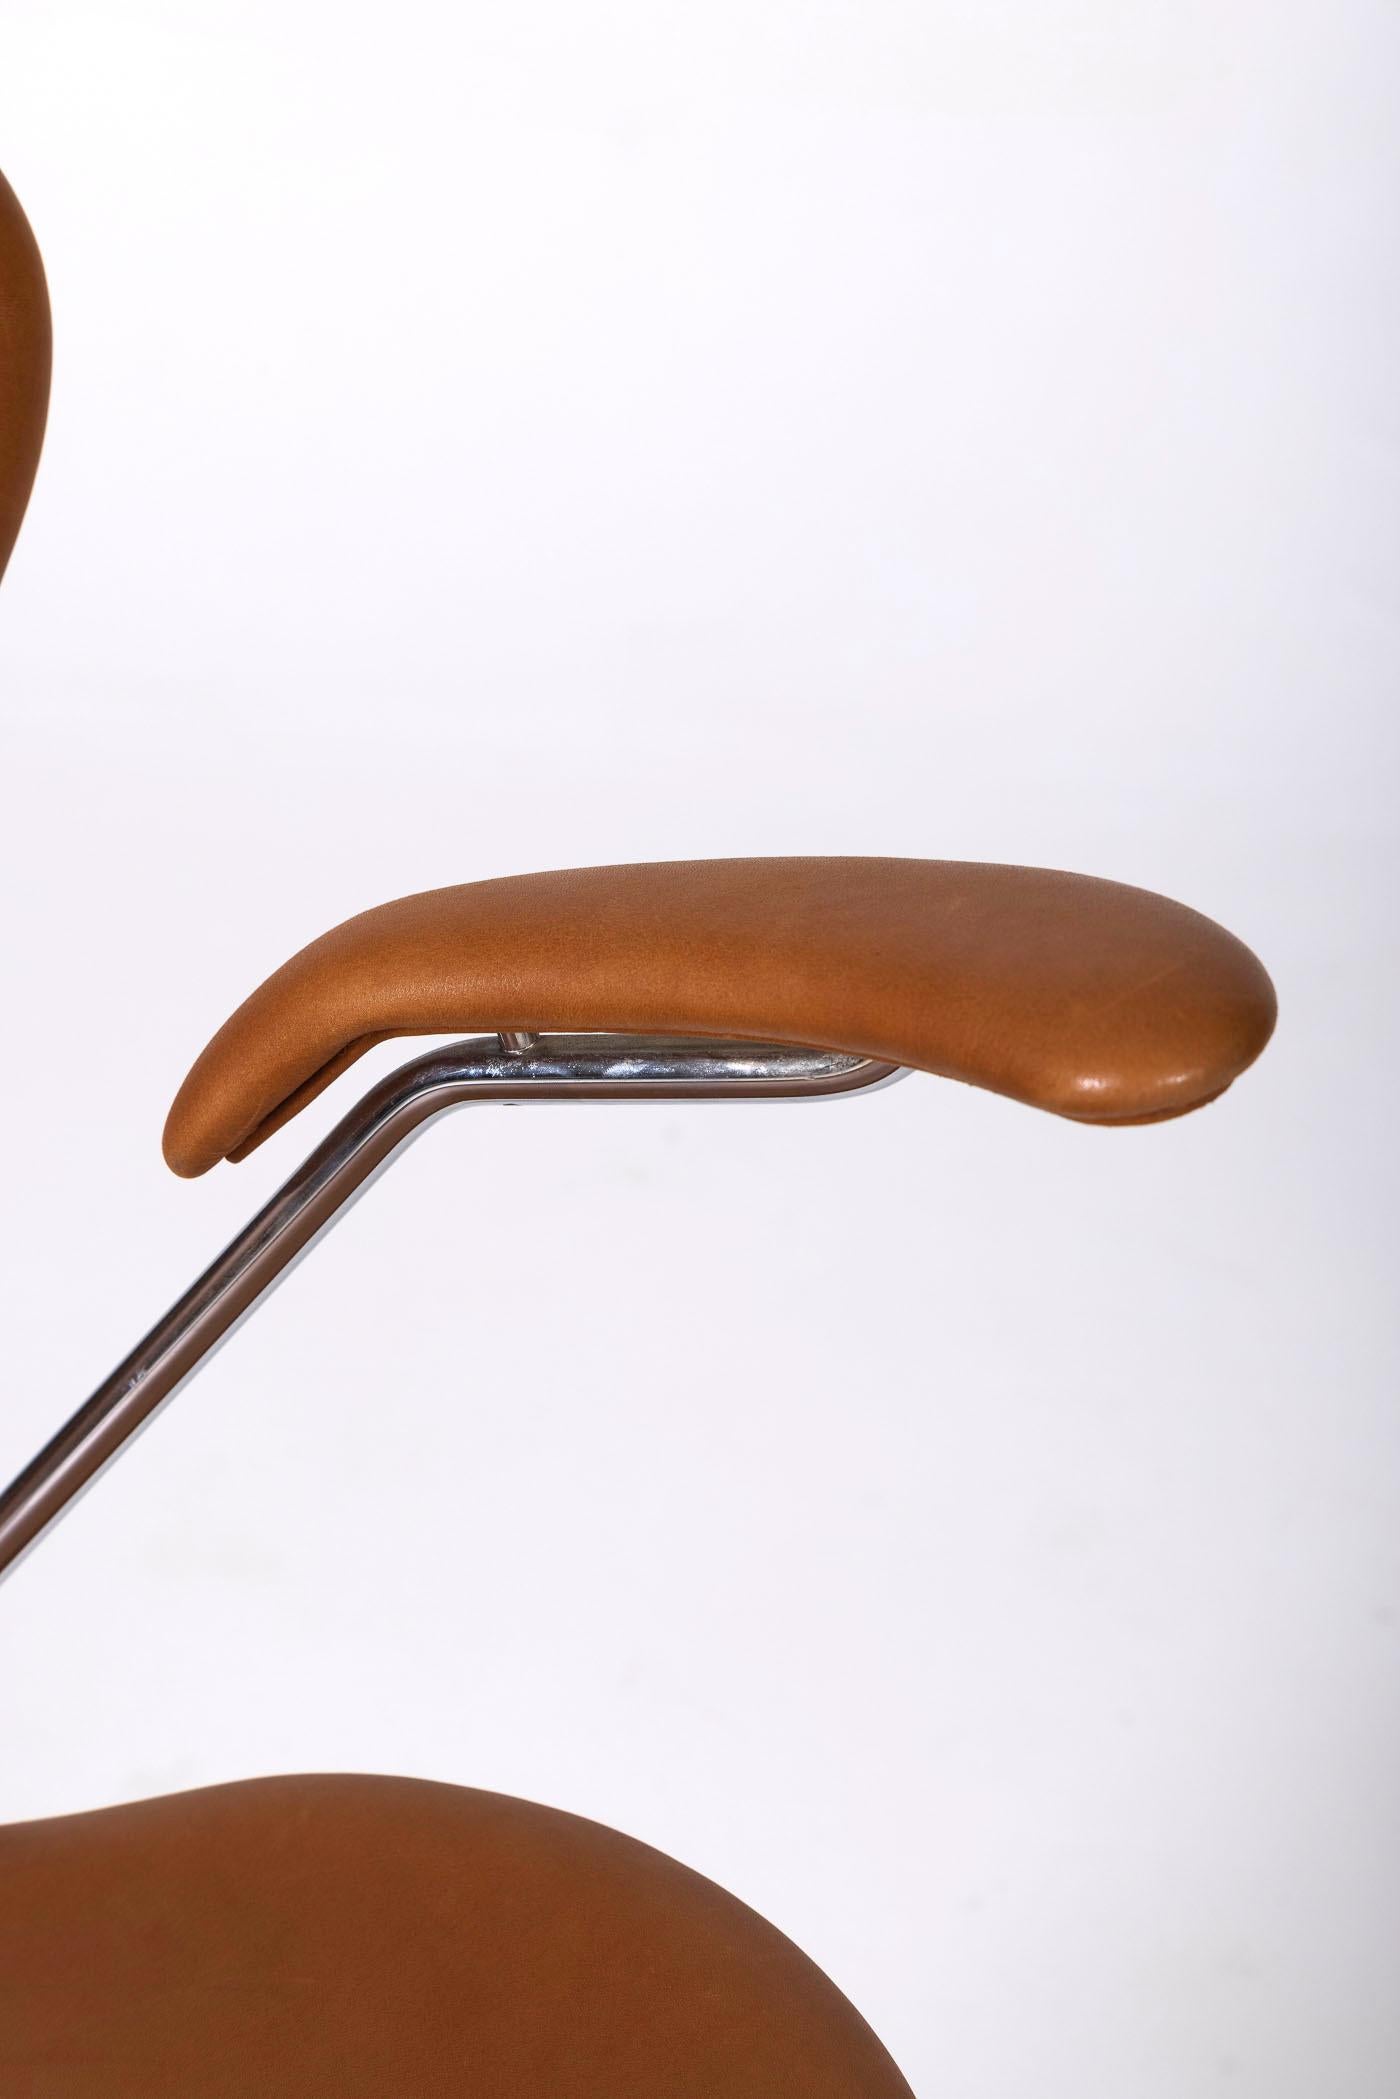 Arne Jacobsen leather armchair For Sale 7